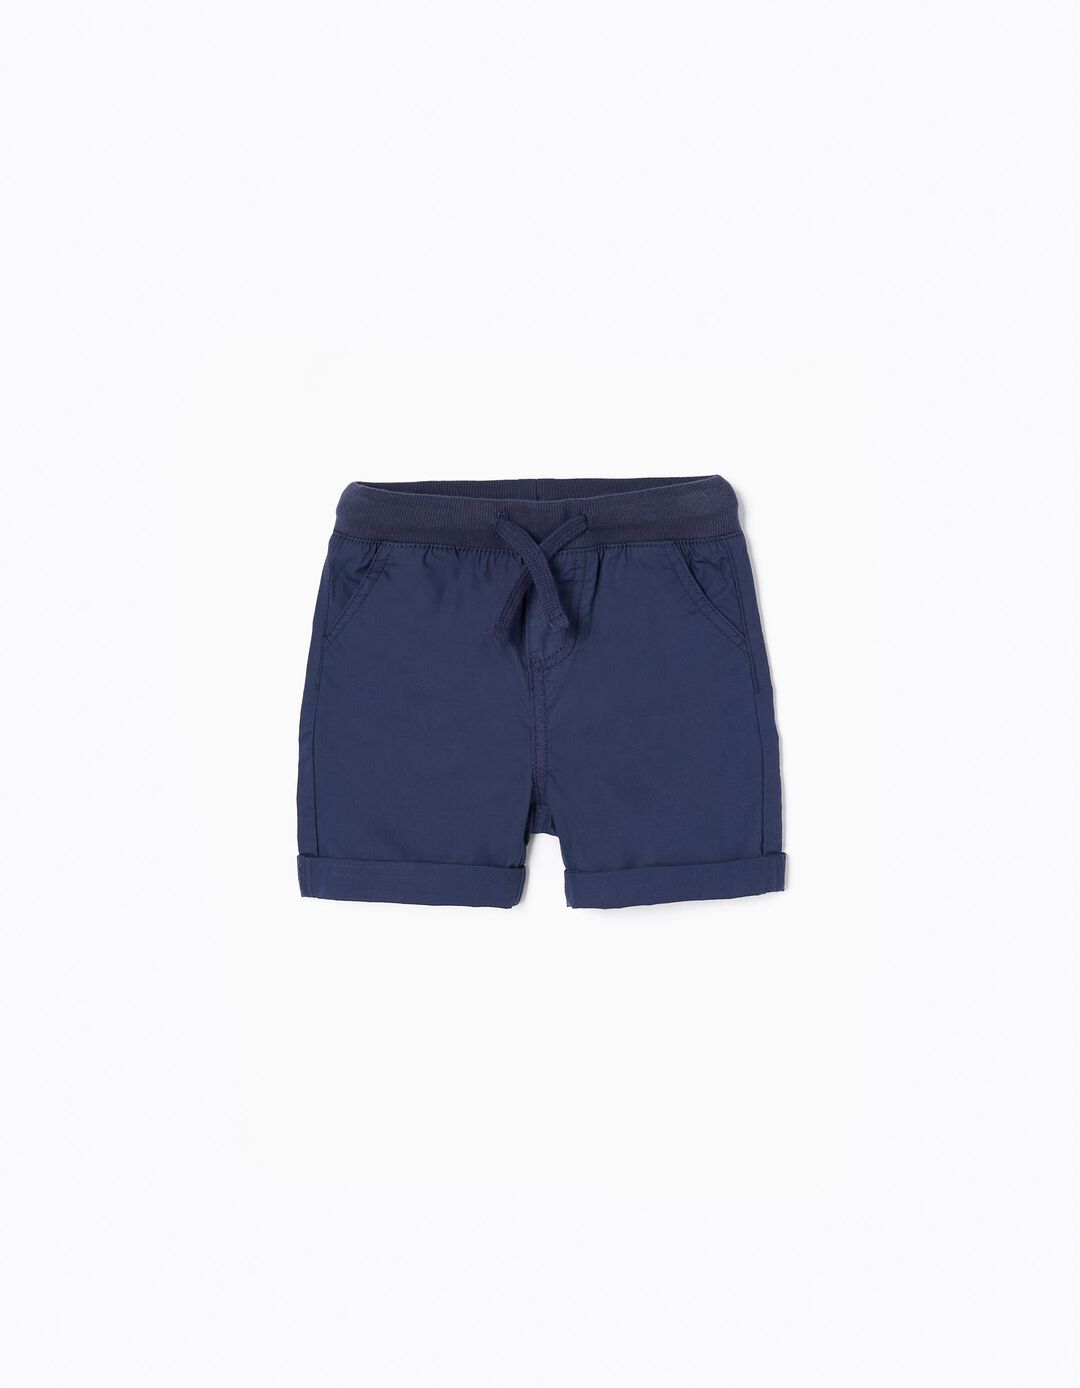 Cotton Shorts for Baby Boys, Dark Blue